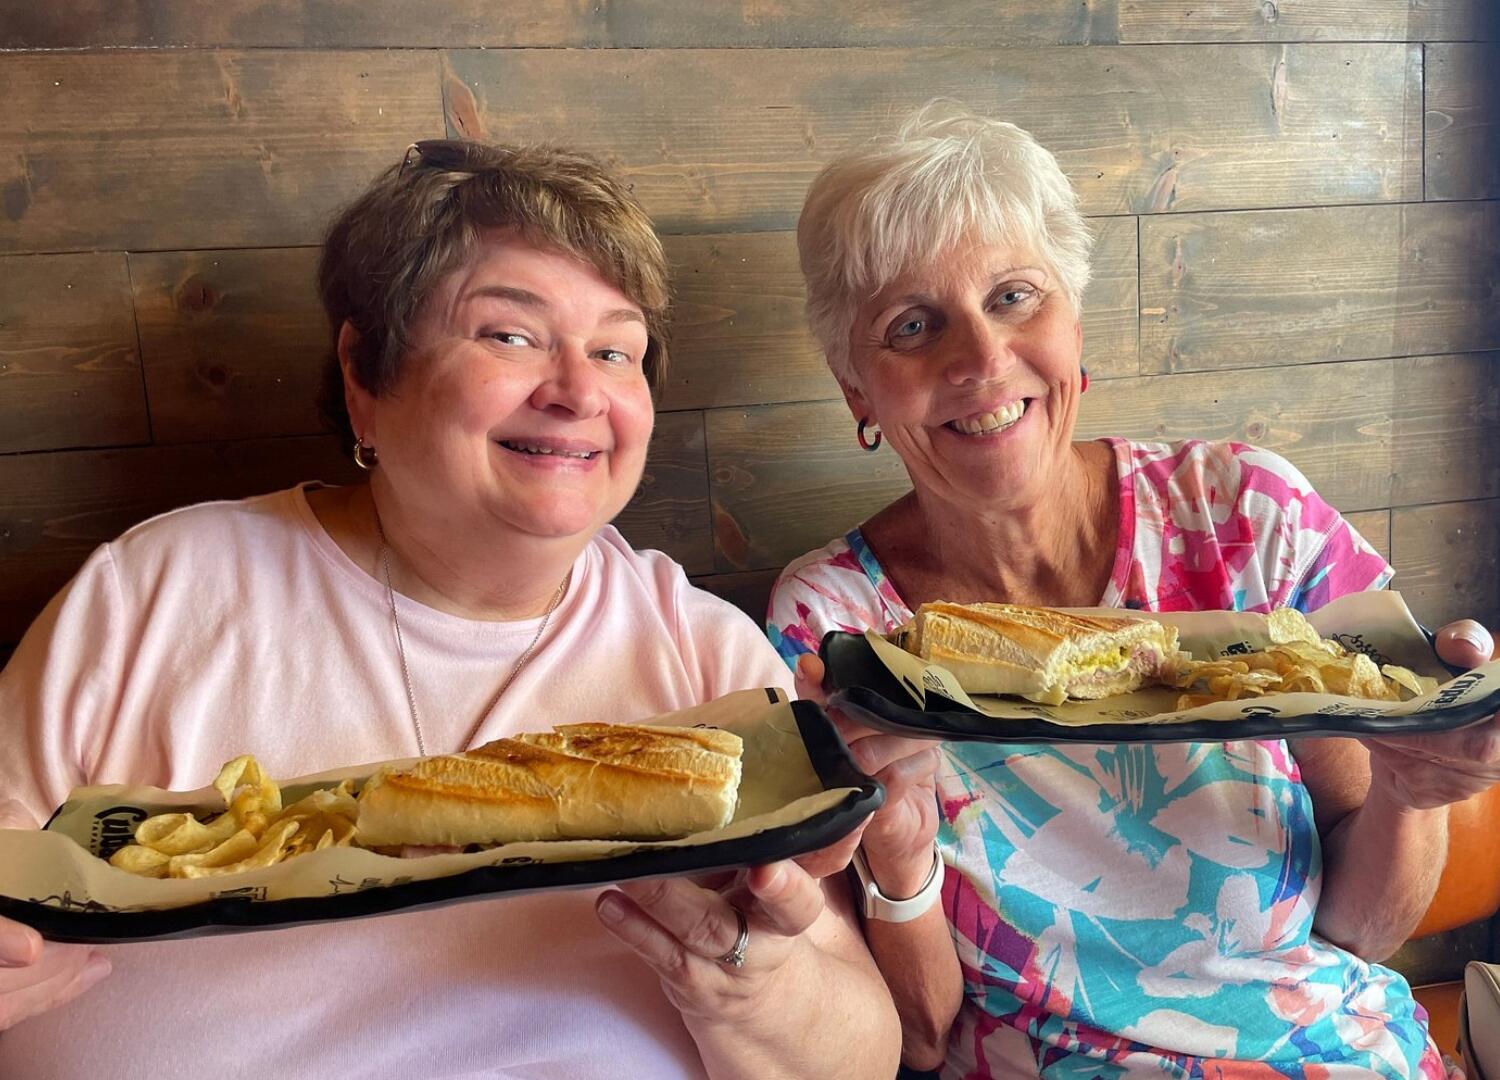 Two women enjoying Miami Food Tours with plates of food.